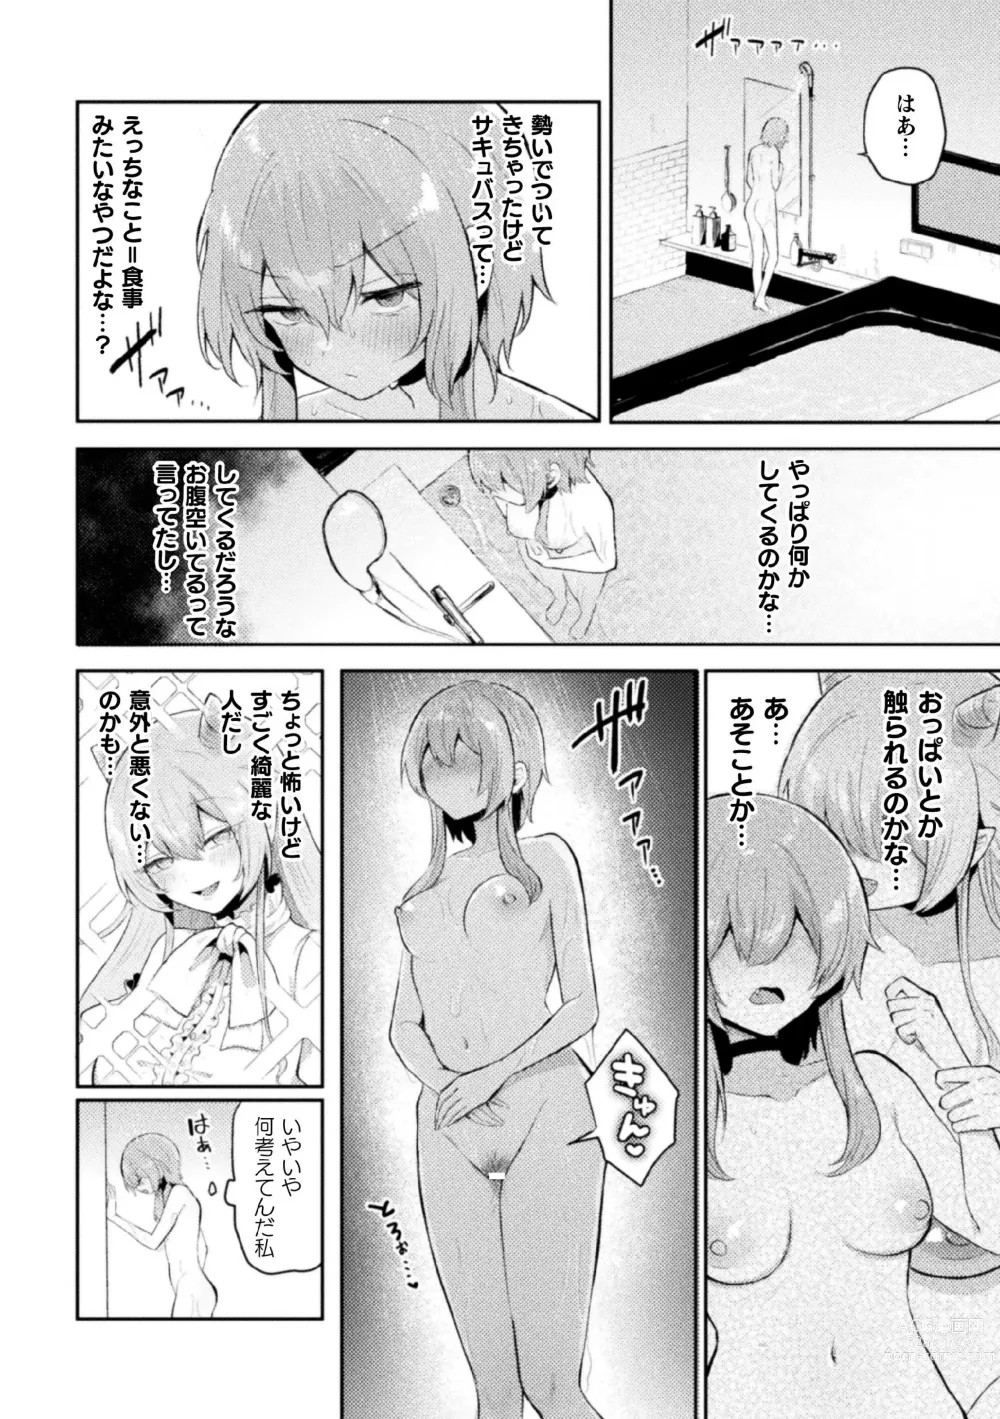 Page 25 of manga 2D Comic Magazine Succubus Yuri H Vol. 2